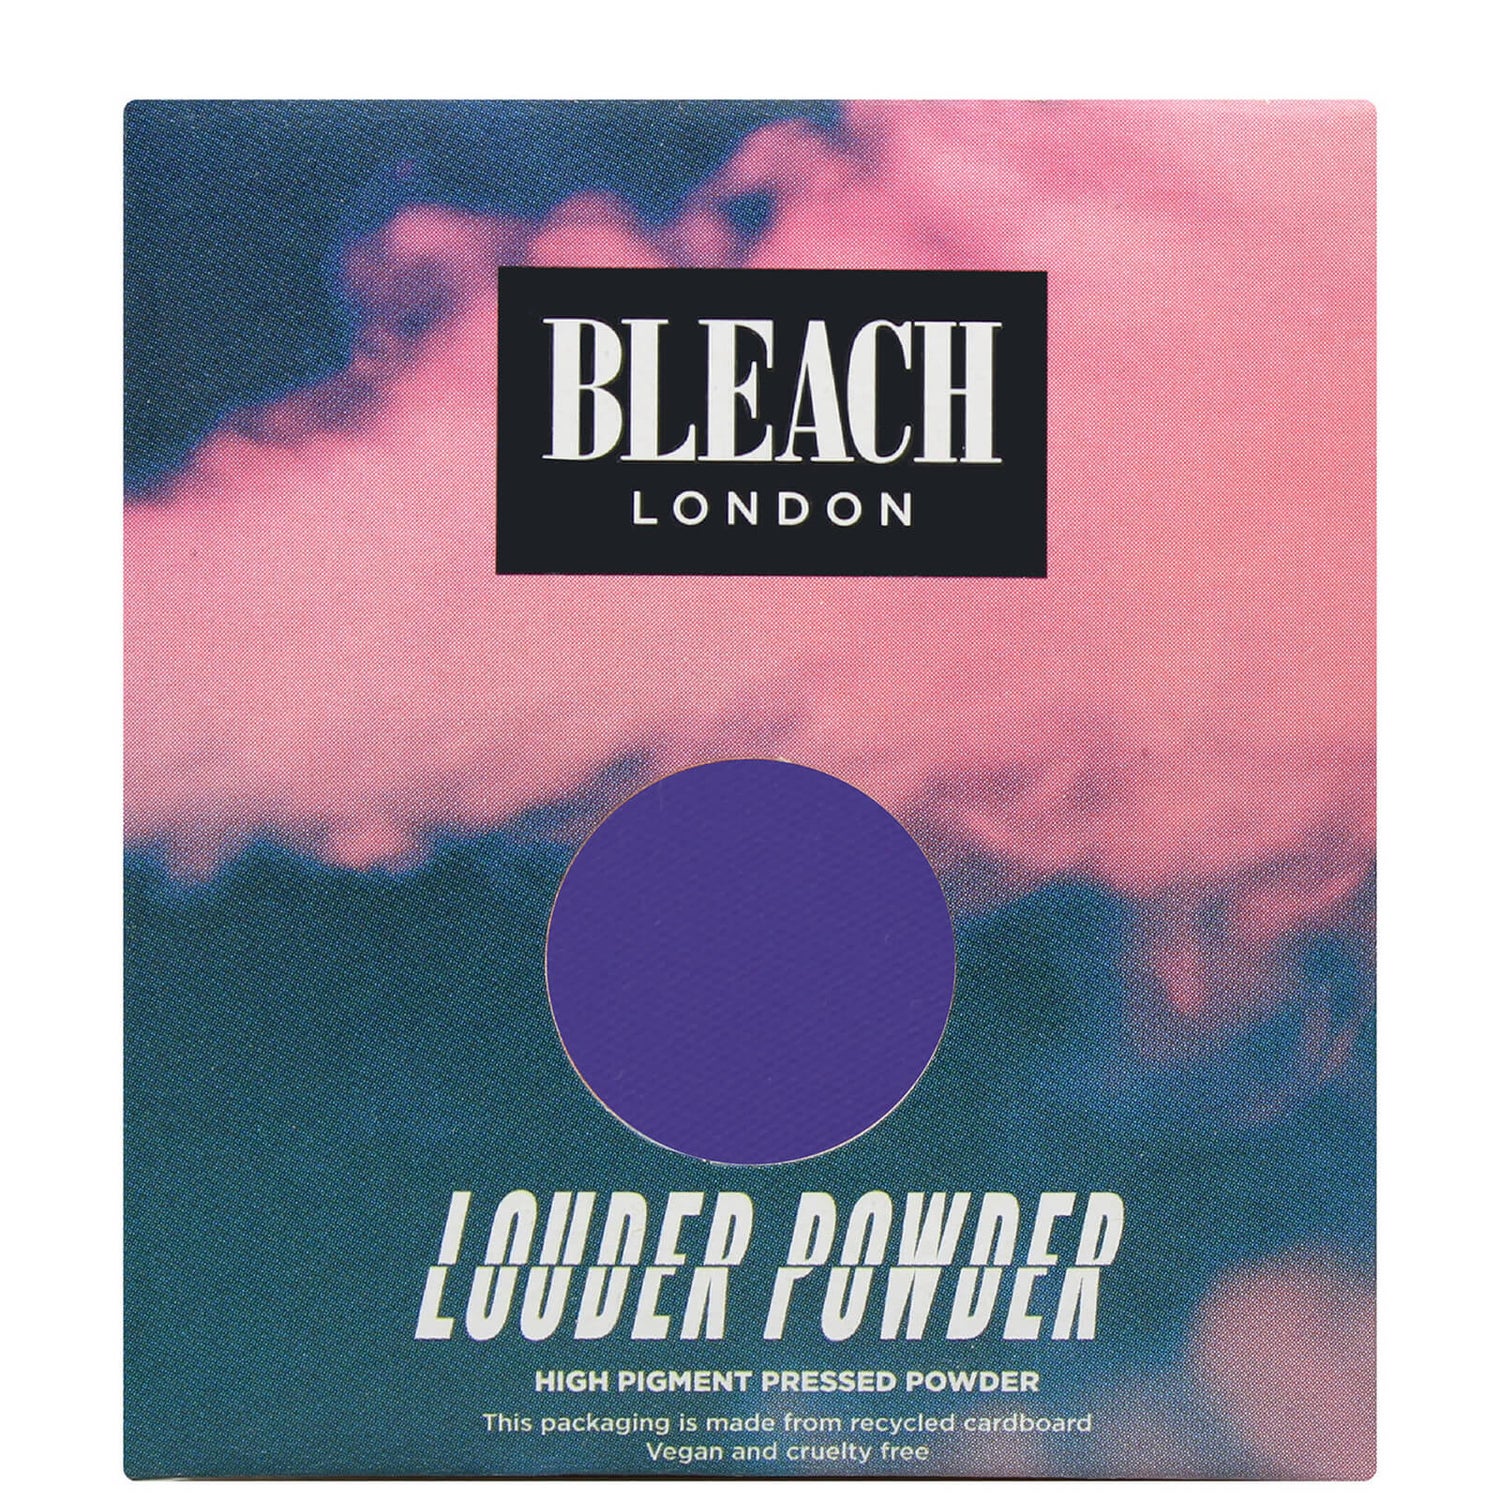 BLEACH LONDON Louder Powder Vs 4 Ma(블리치 런던 라우더 파우더 Vs 4 Ma)